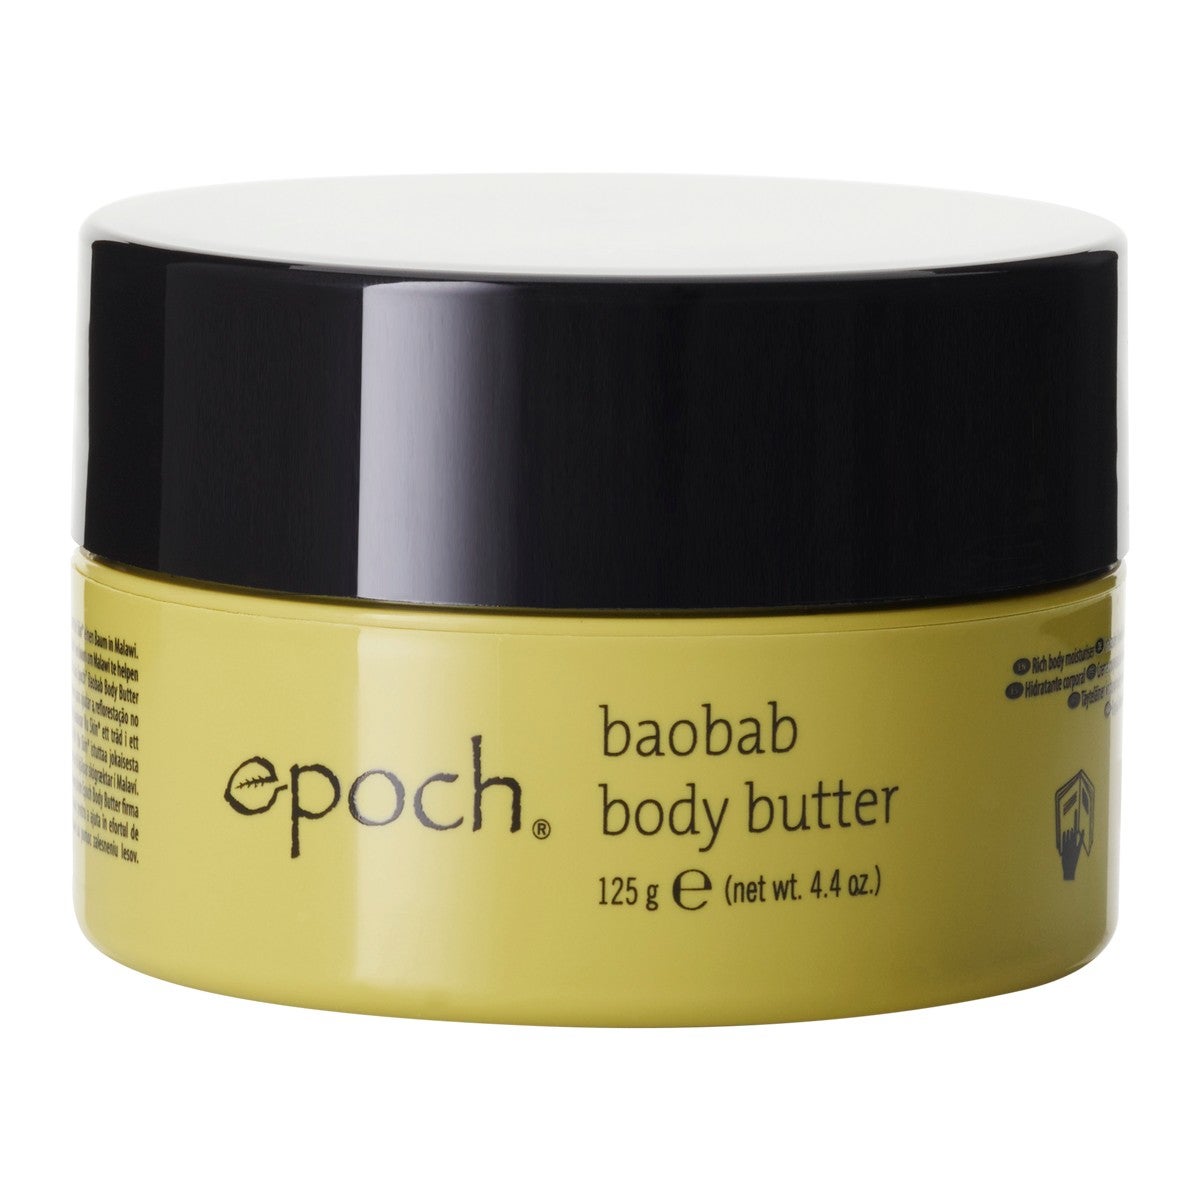 Epoch® Baobab Body Butter